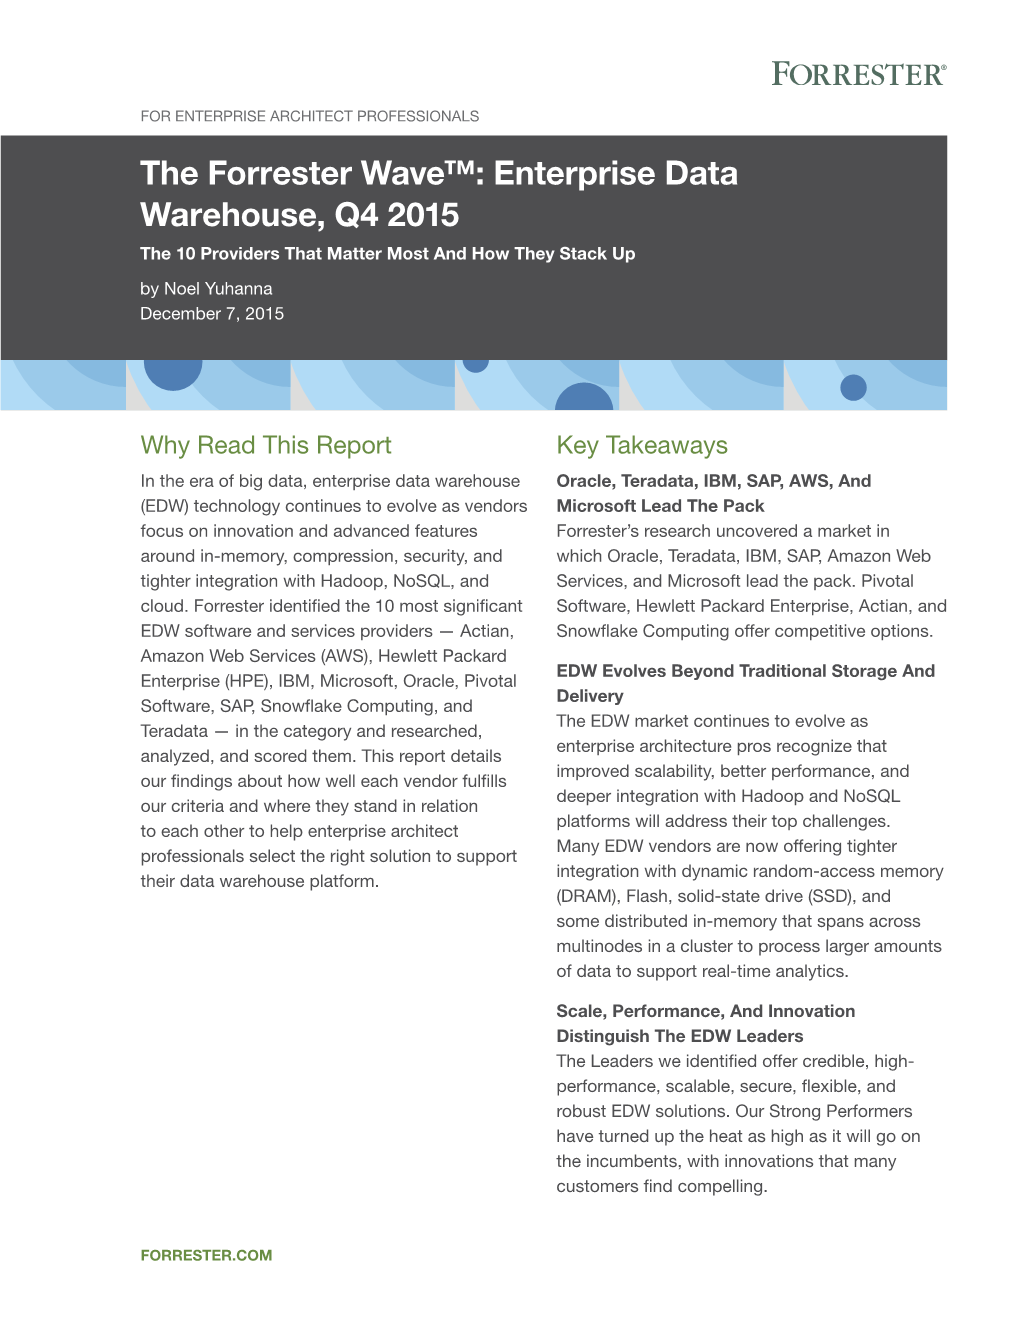 The Forrester Wave: Enterprise Data Warehouse, Q4 2015